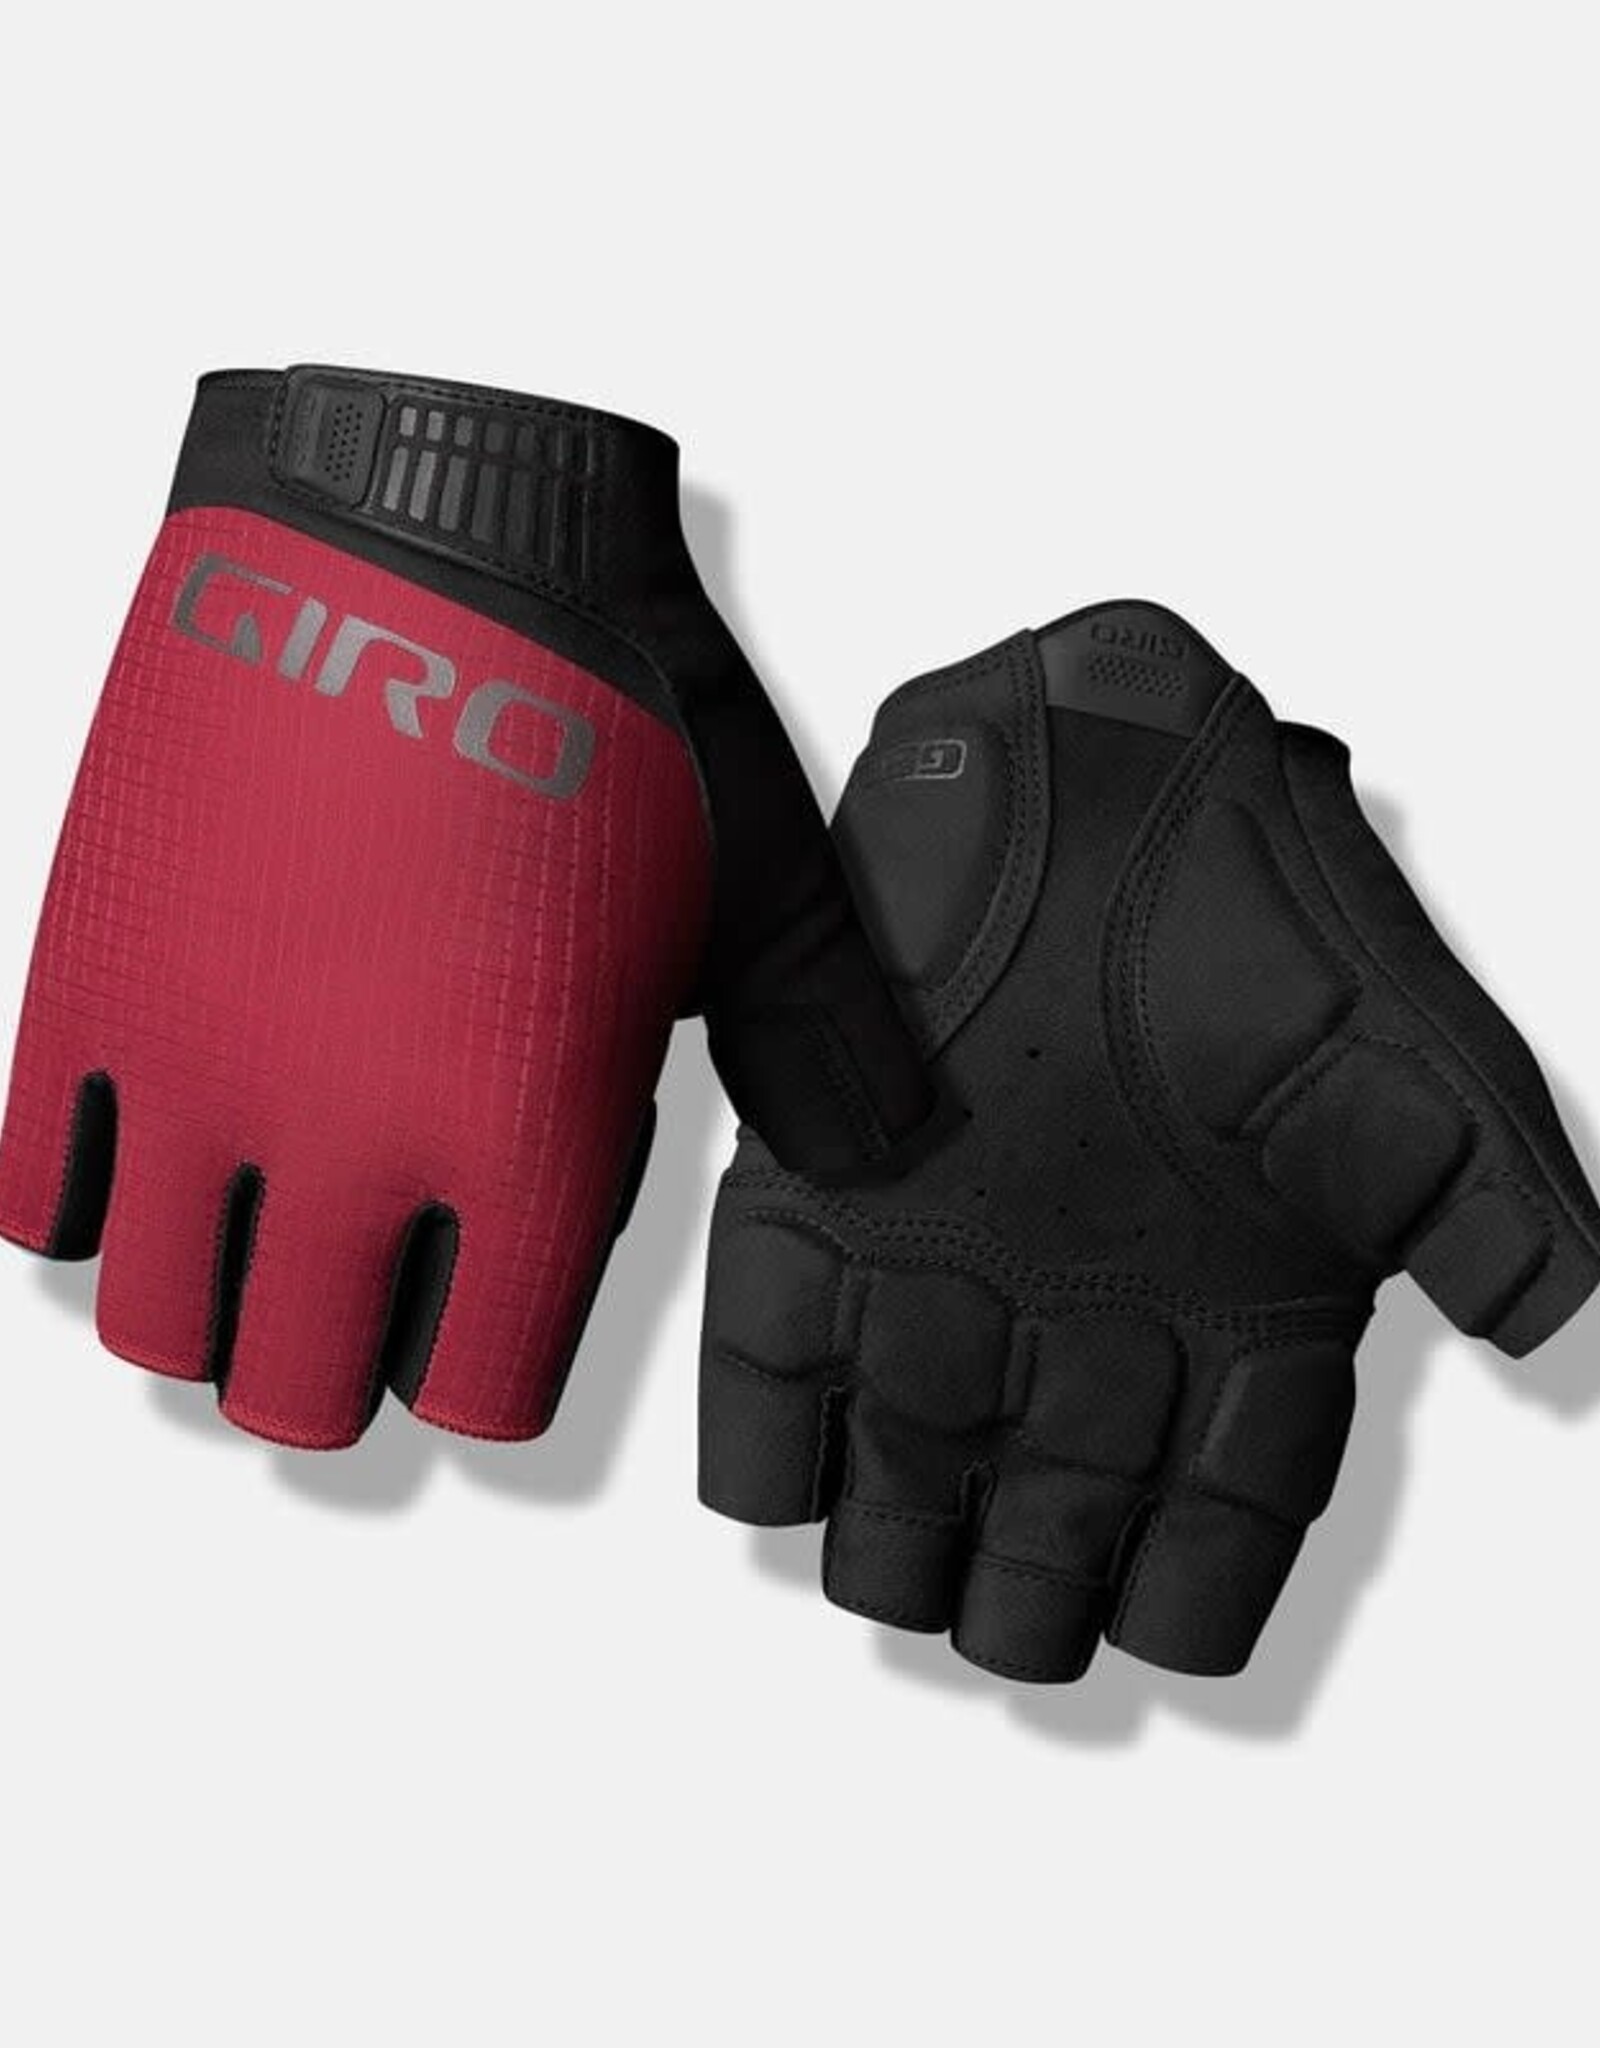 Giro Bravo II Gel Glove Ox Red M 7160171